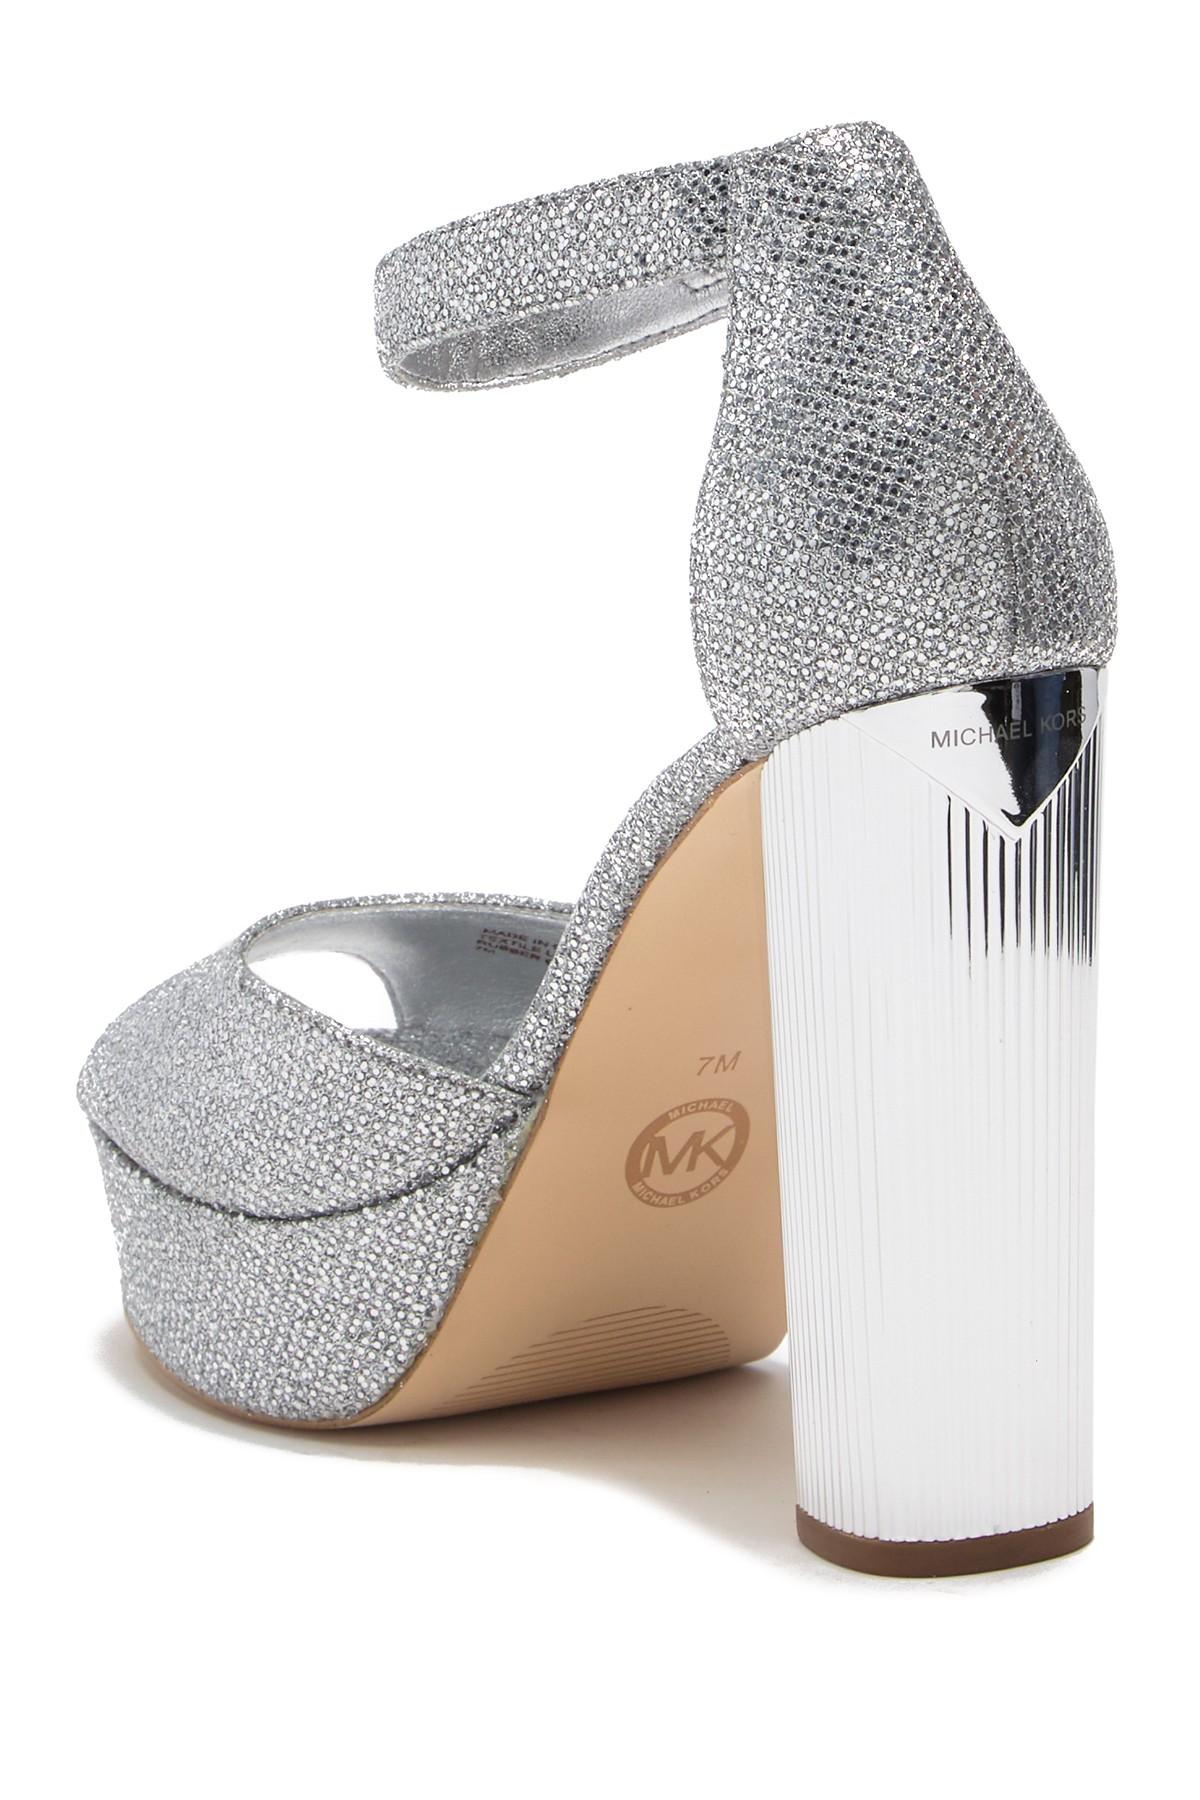 Michael Kors Silver Sandals Girls Size 4  eBay